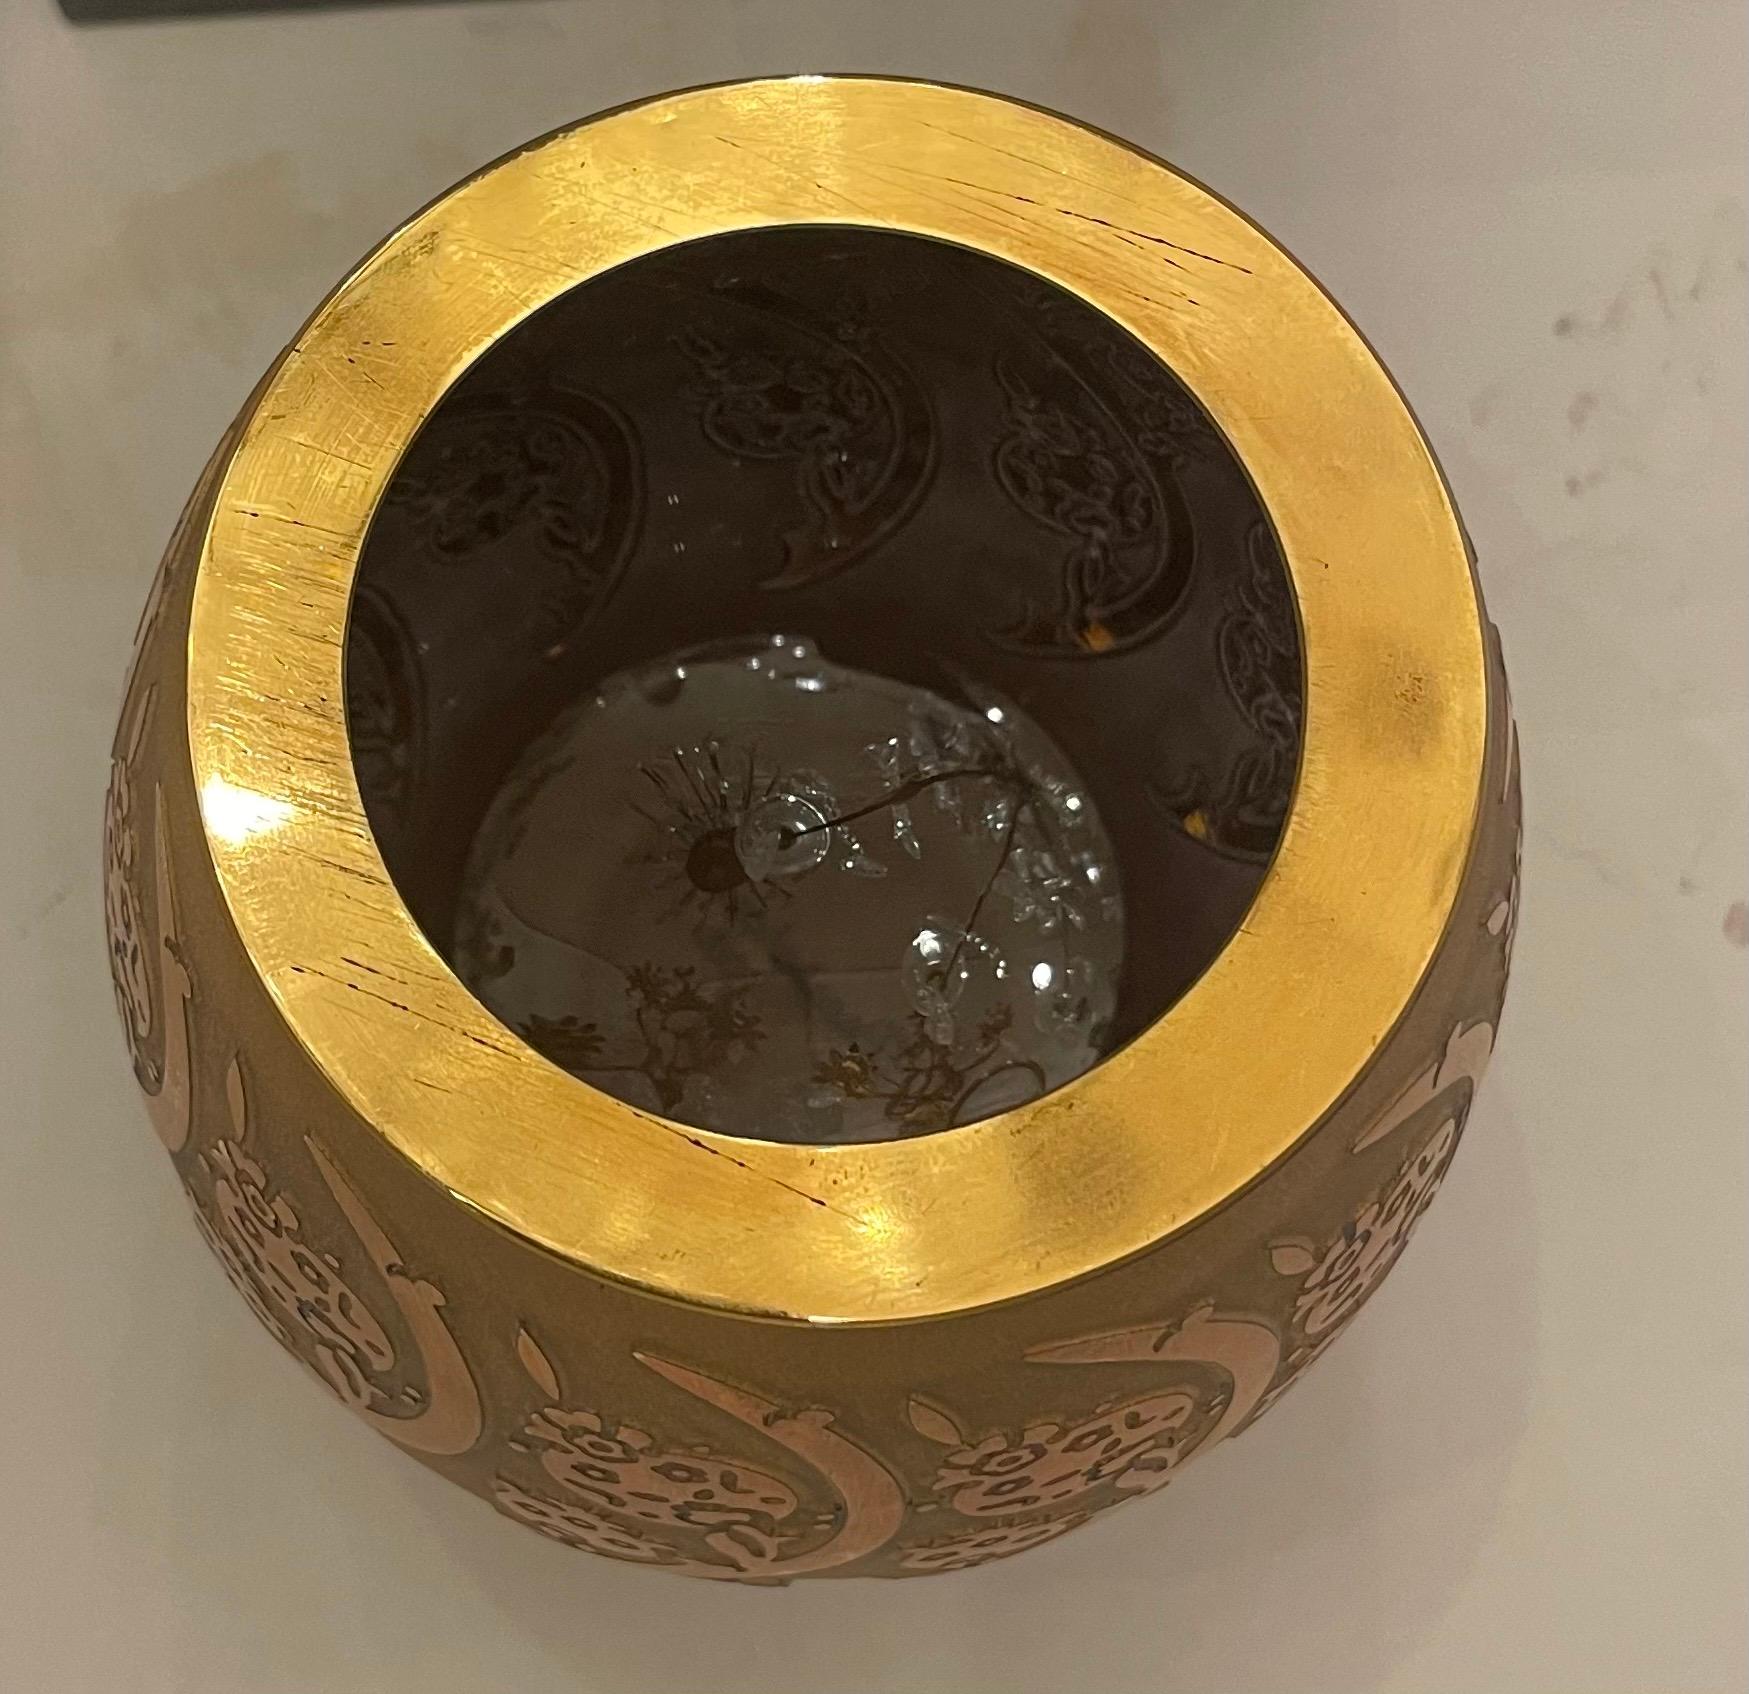 Wonderful Turkish Gold Art Glass Vase Pasabahce Magazalari Butik Original Box In Good Condition For Sale In Roslyn, NY